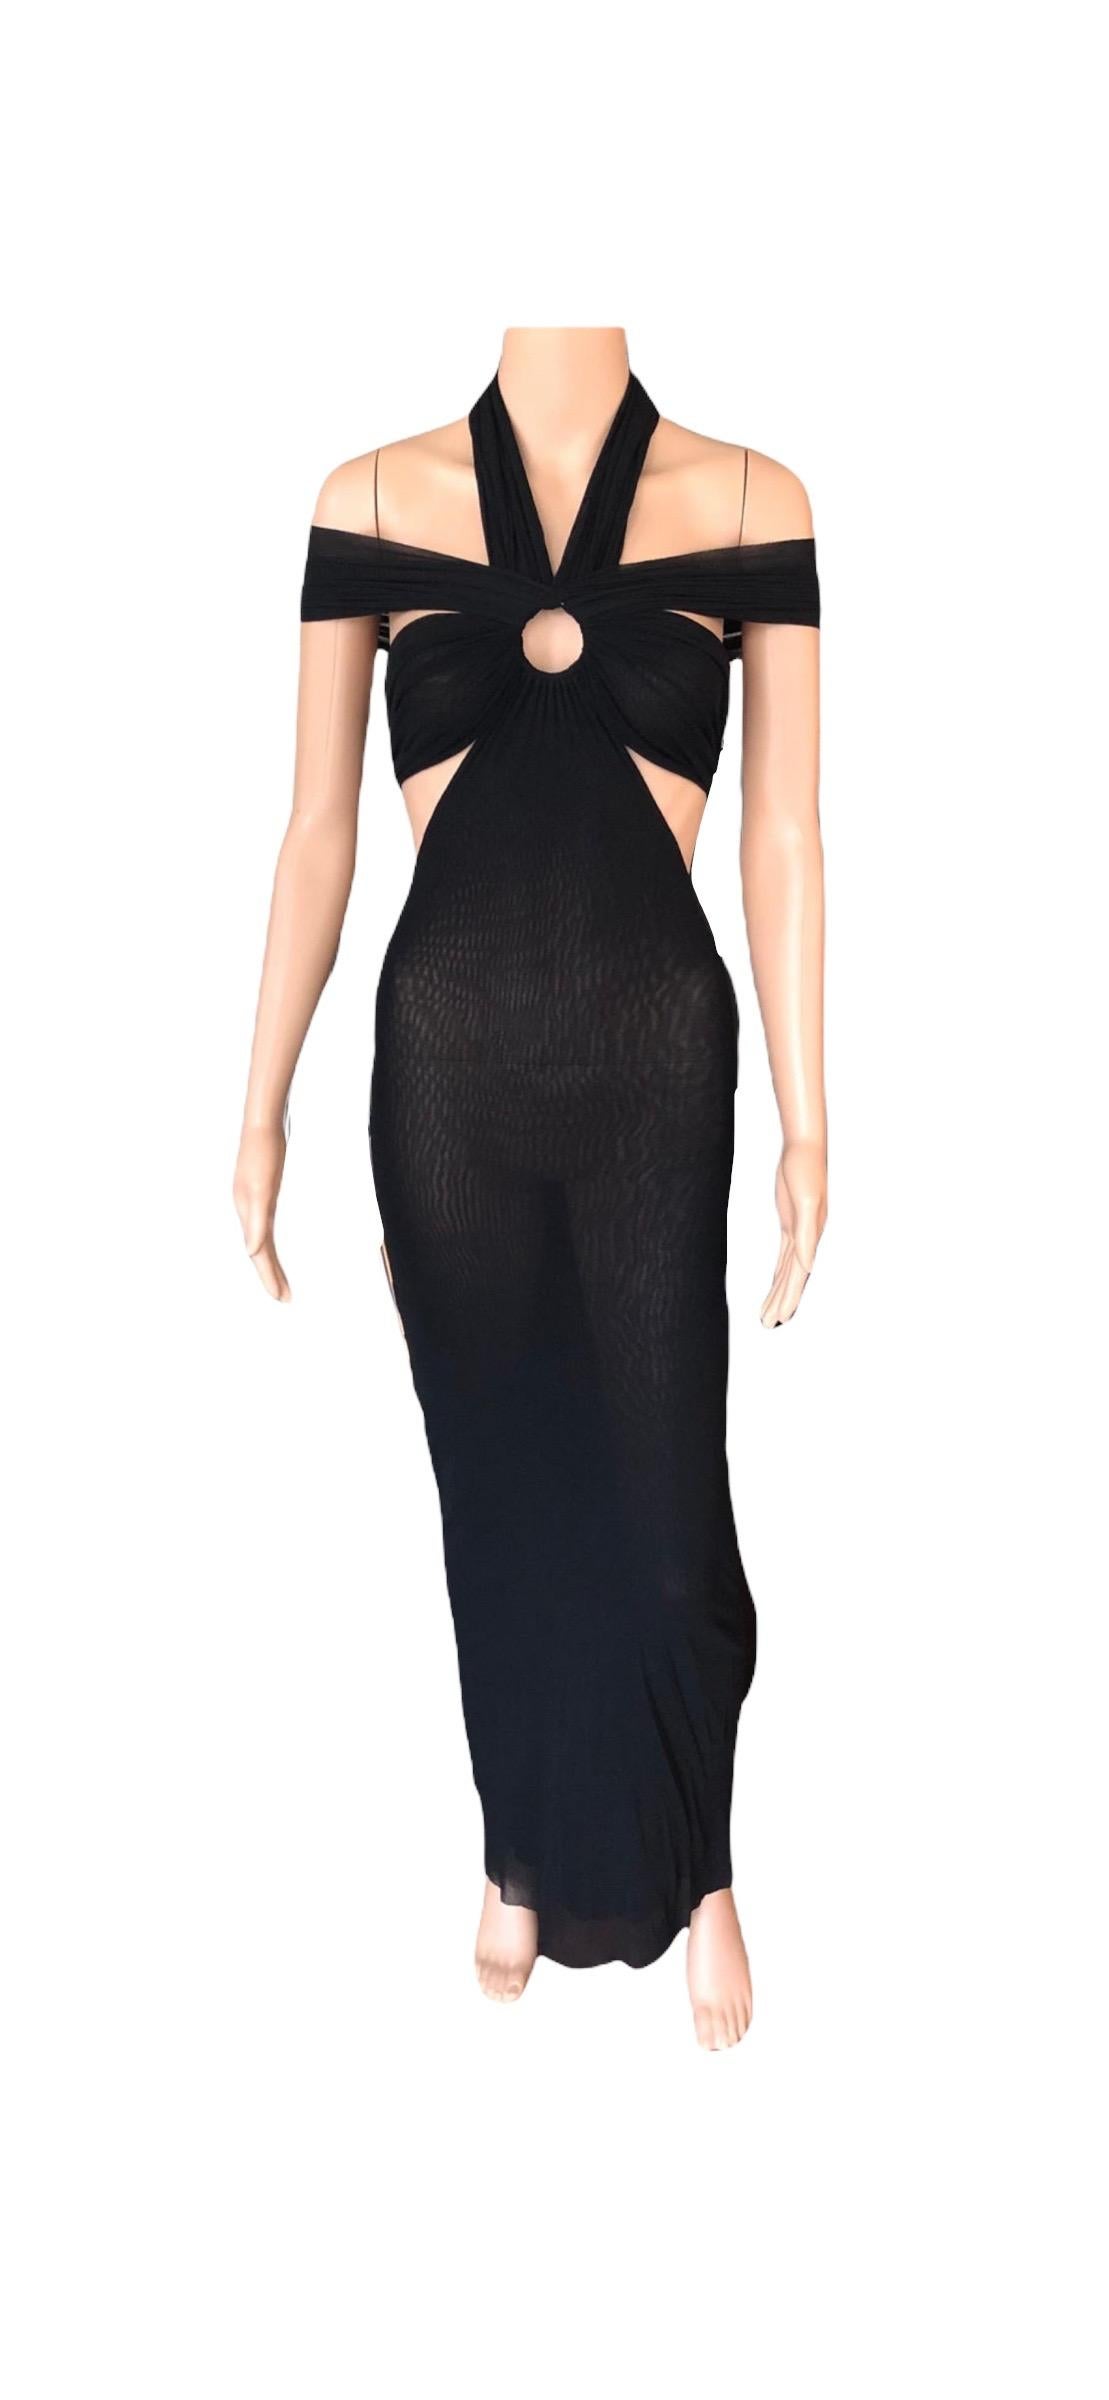 Jean Paul Gaultier Soleil S/S 1999 Cutout Sheer Mesh Bodycon Black Maxi Dress For Sale 1